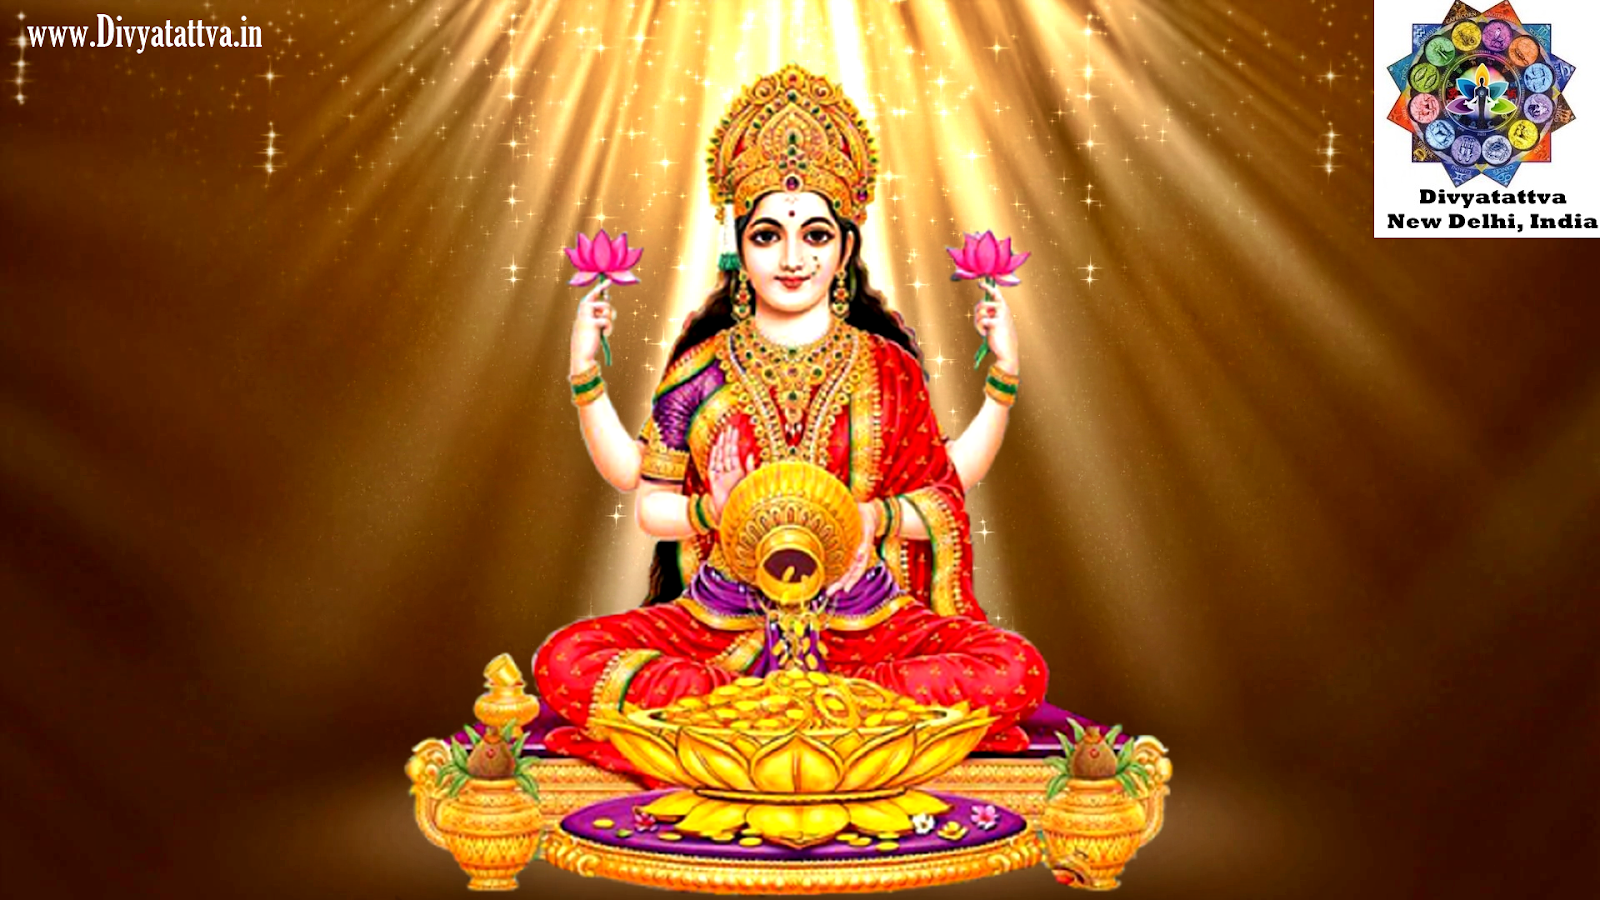 goddess lakshmi wallpapers,event,guru,place of worship,temple,diwali